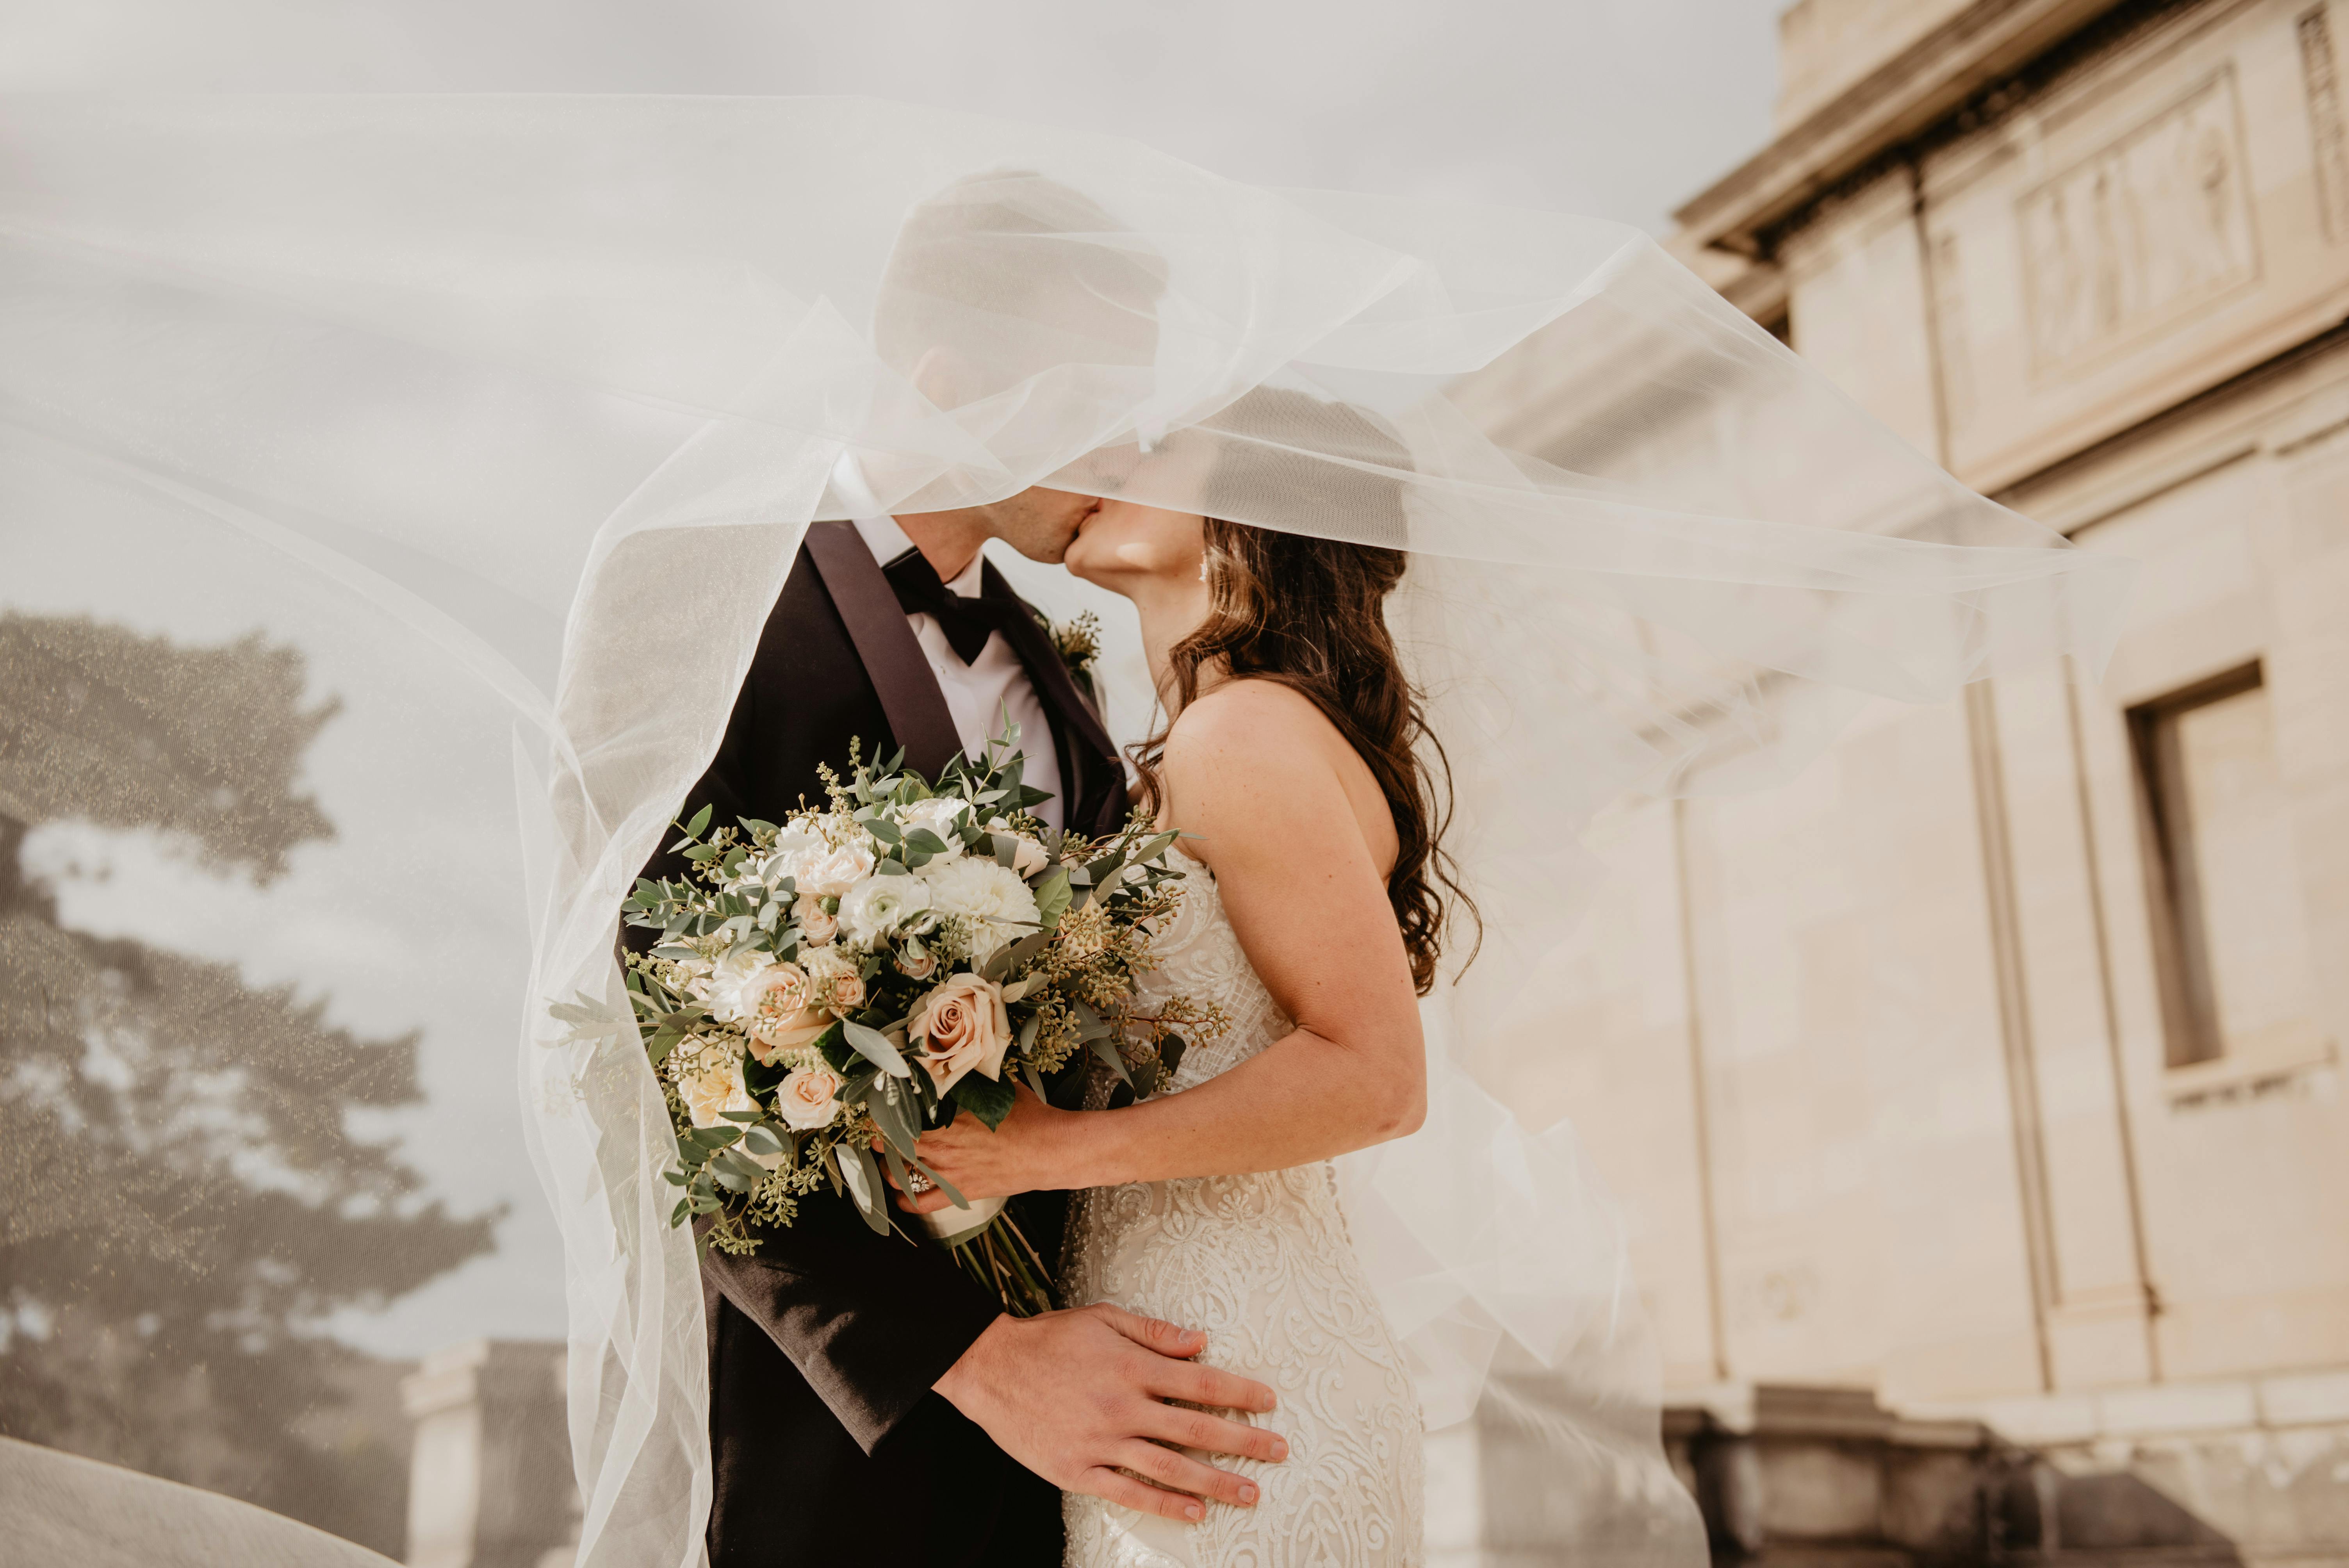 1000+ Amazing Wedding Photos · Pexels · Free Stock Photos